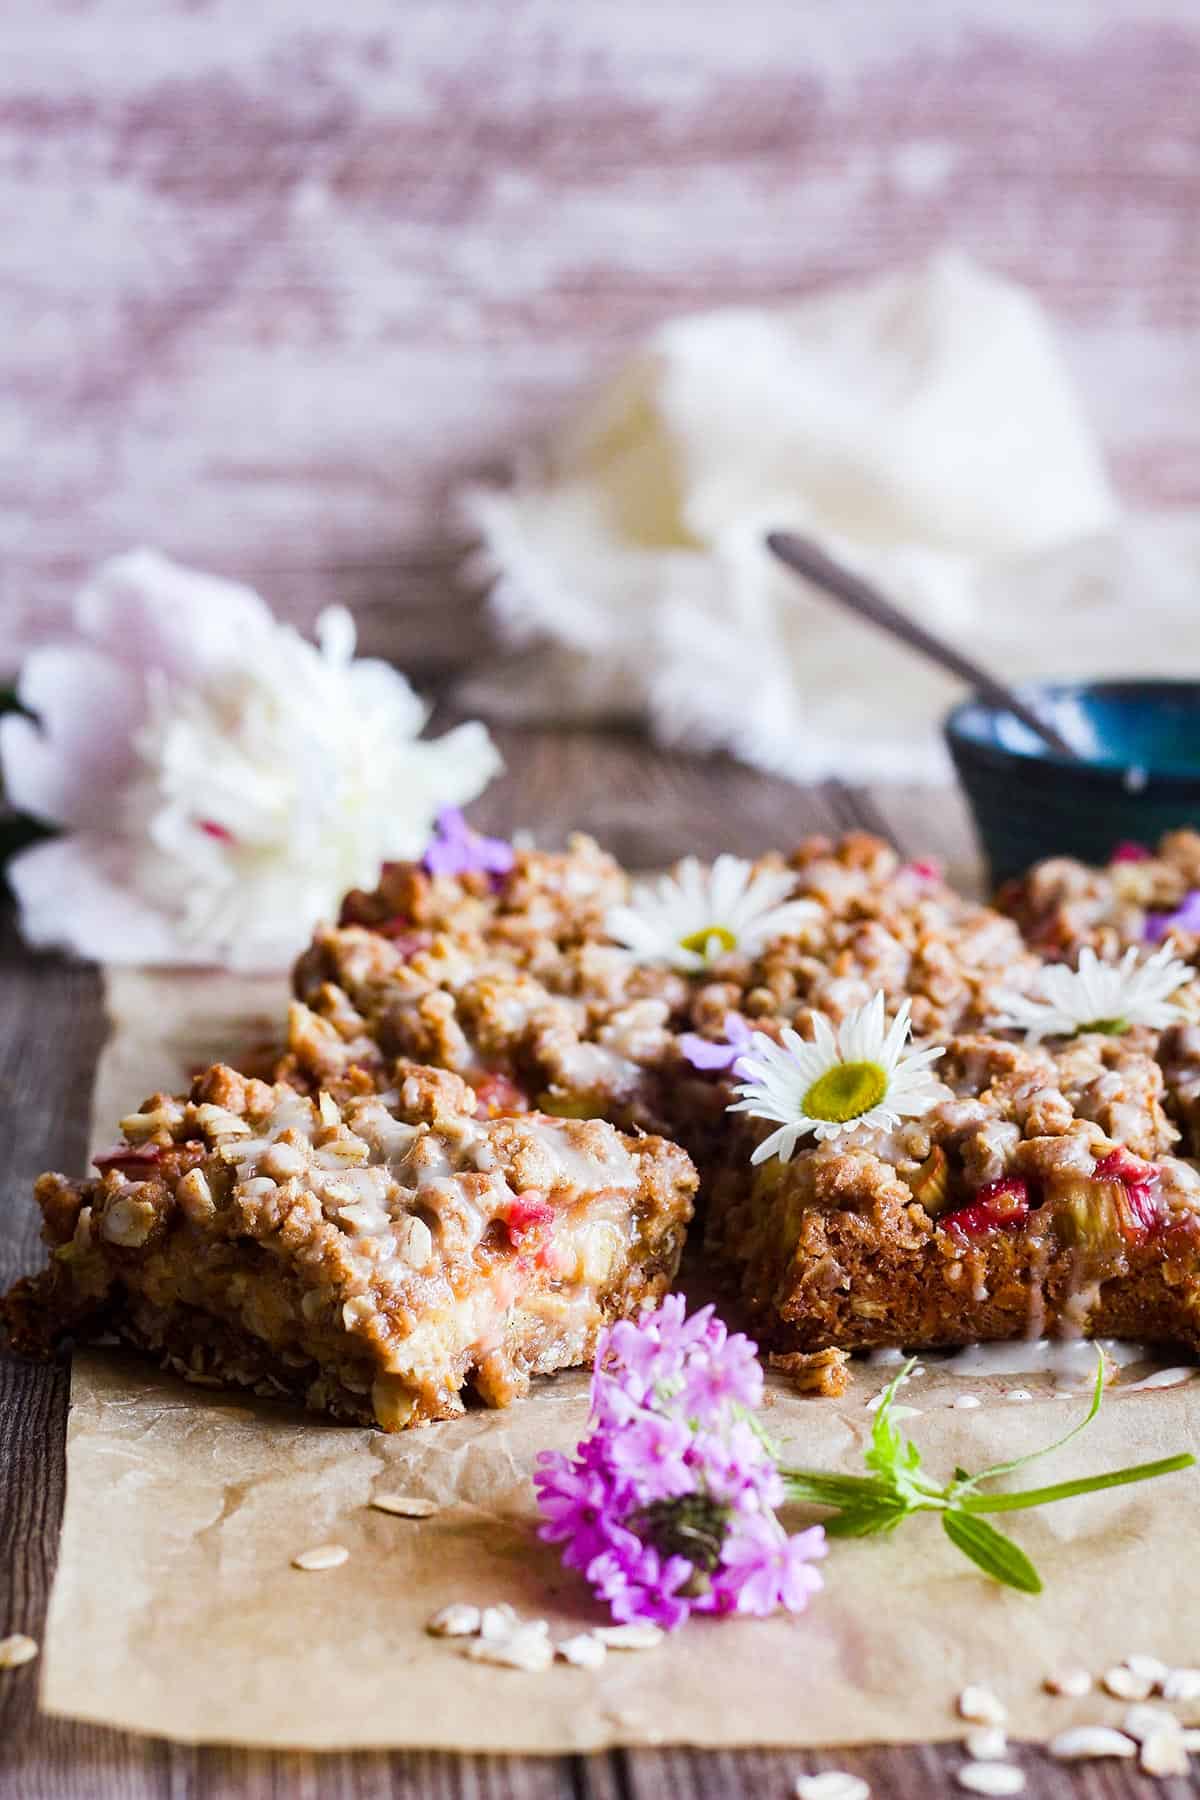 Rhubarb oatmeal bars with flowers and a bowl of glaze.